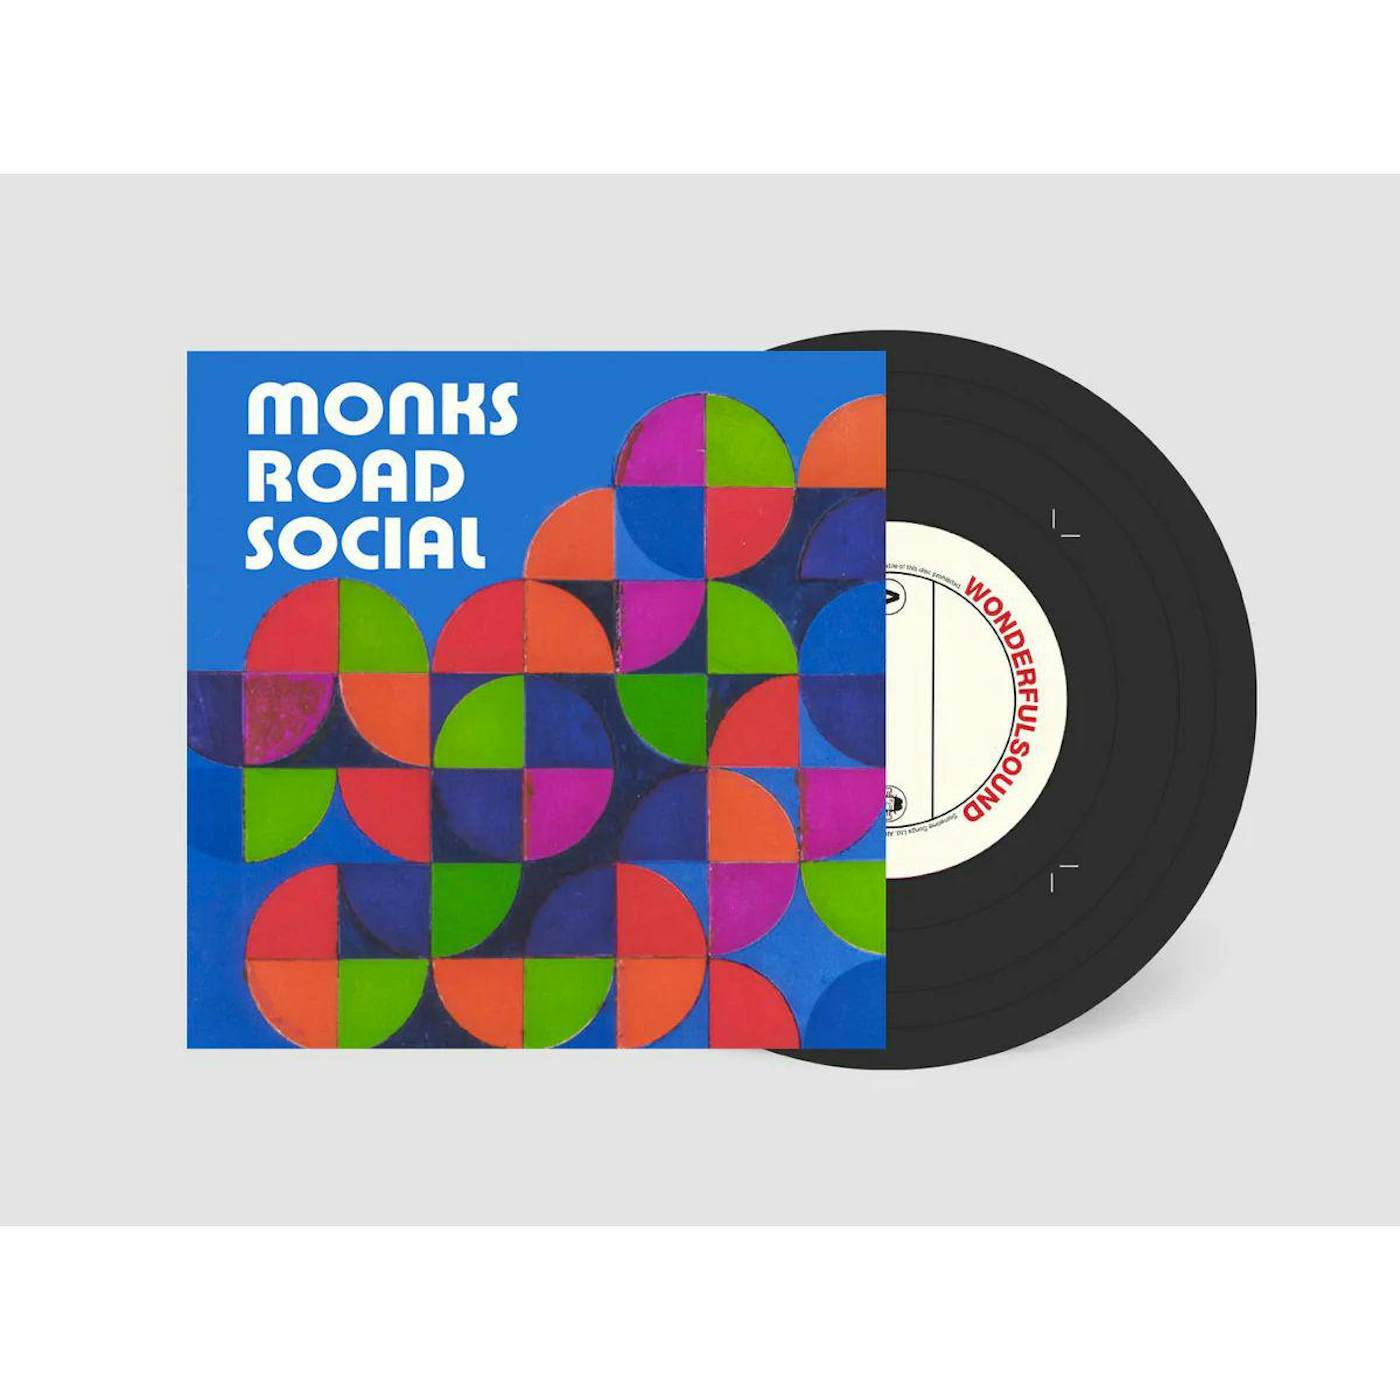 Monks Road Social Rise Up Singing Vinyl Record